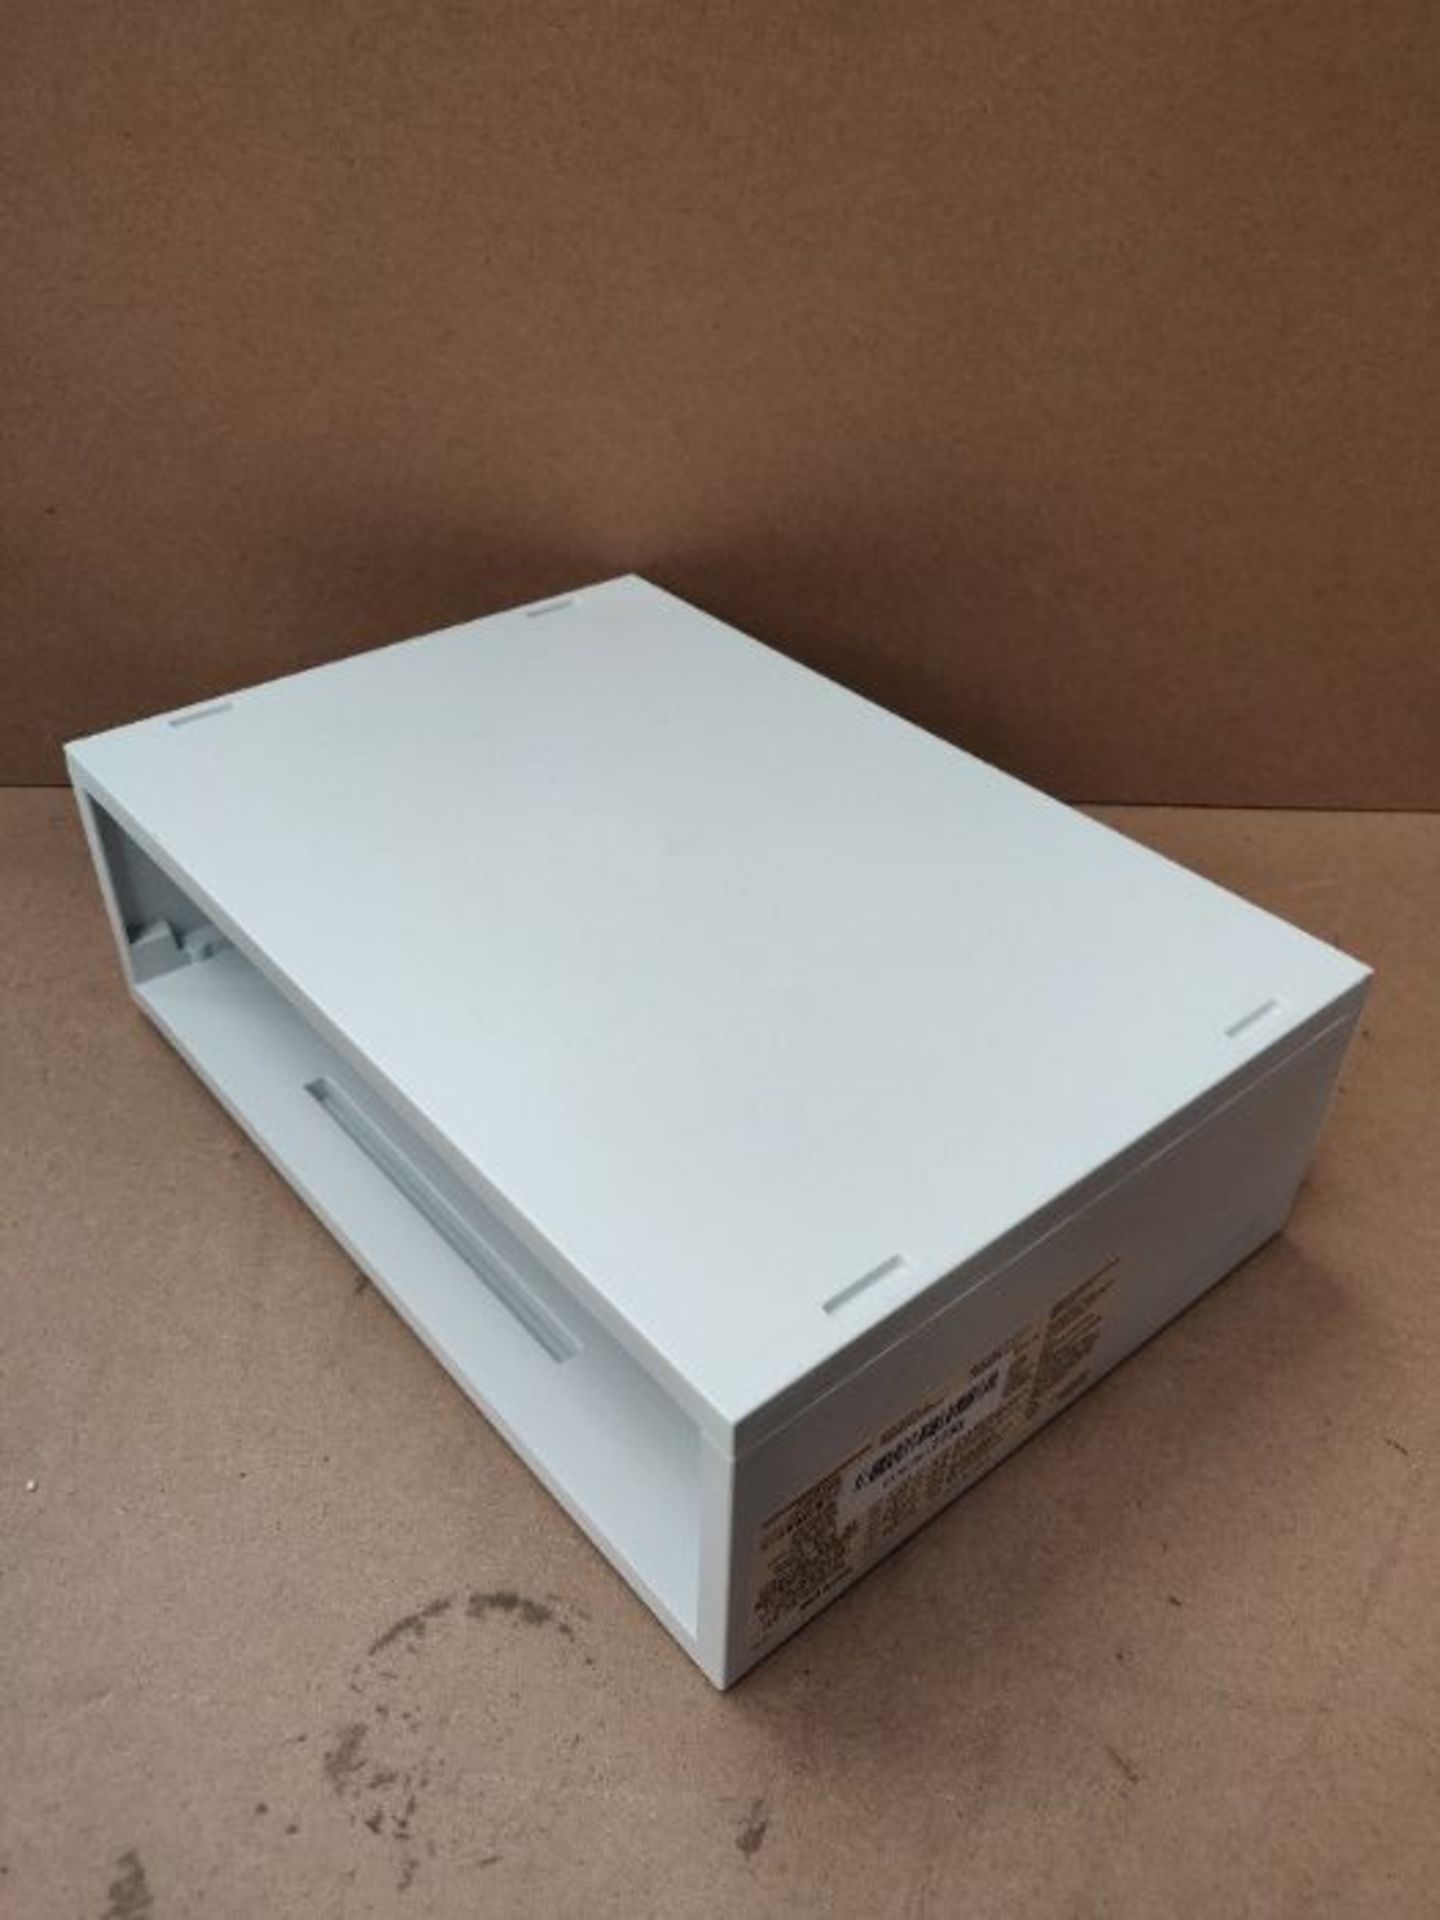 [INCOMPLETE] Muji Polypropylene Drawer Storage Box, A4 Wide, 37 cm Width x 26 cm Depth - Image 2 of 2